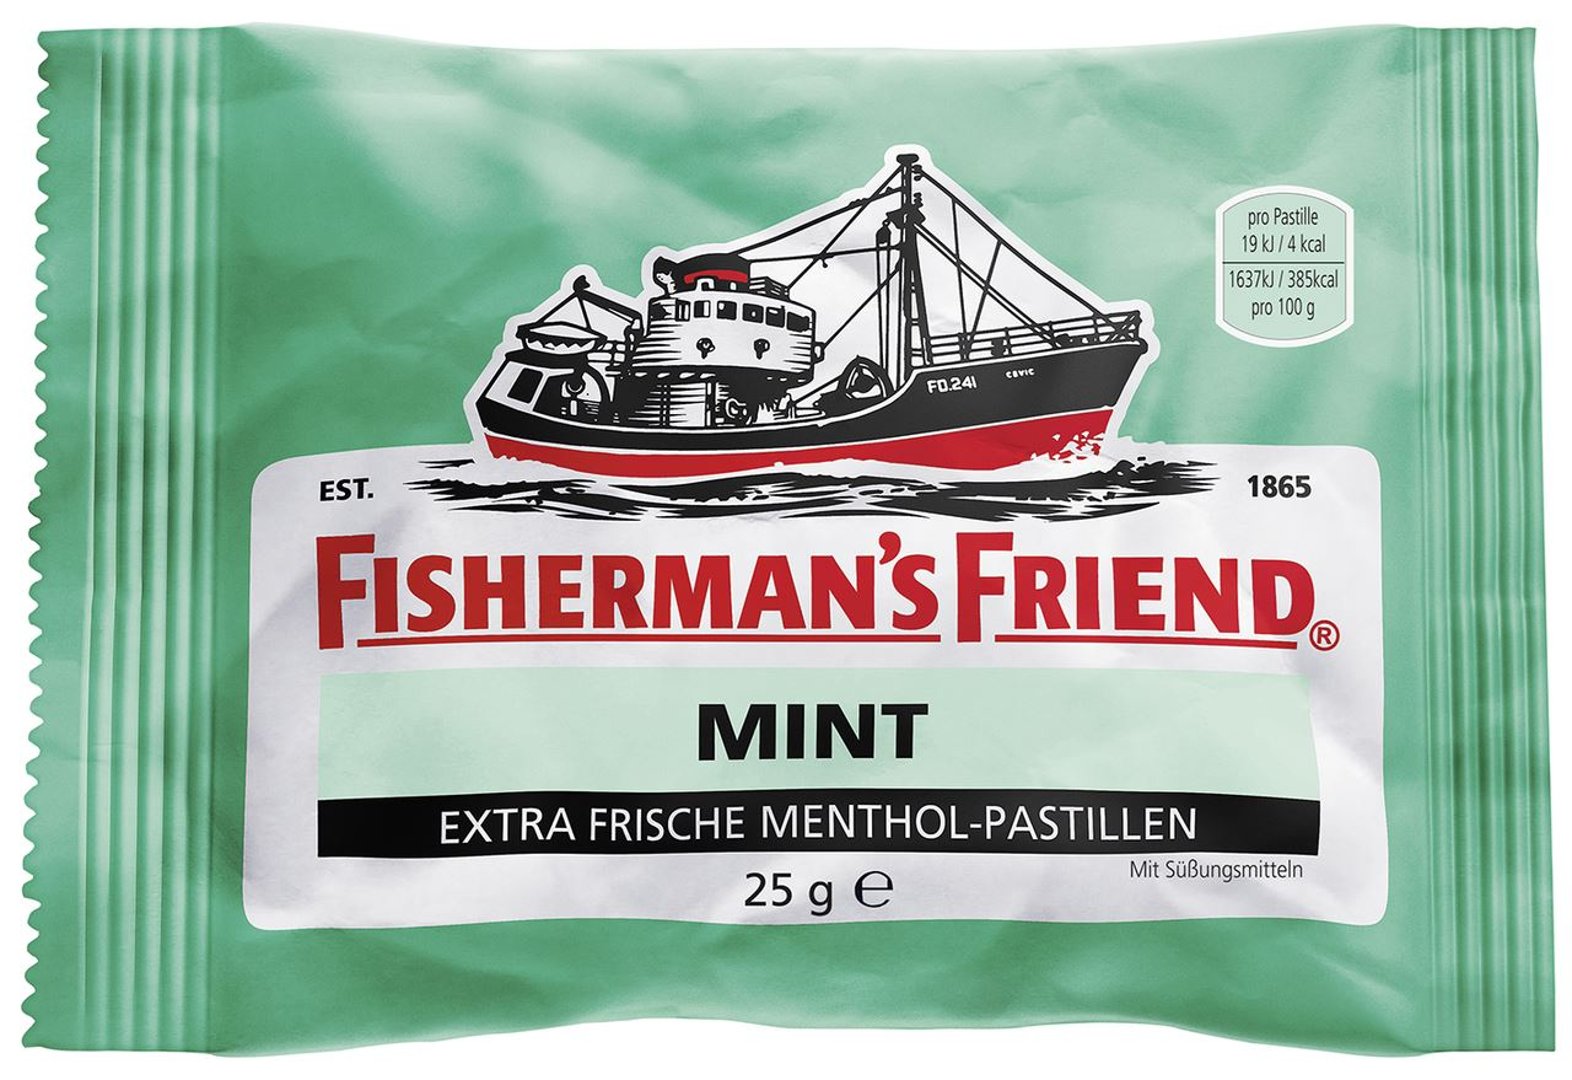 FISHERMAN'S FRIEND Mint mit Zucker 25 g Beutel